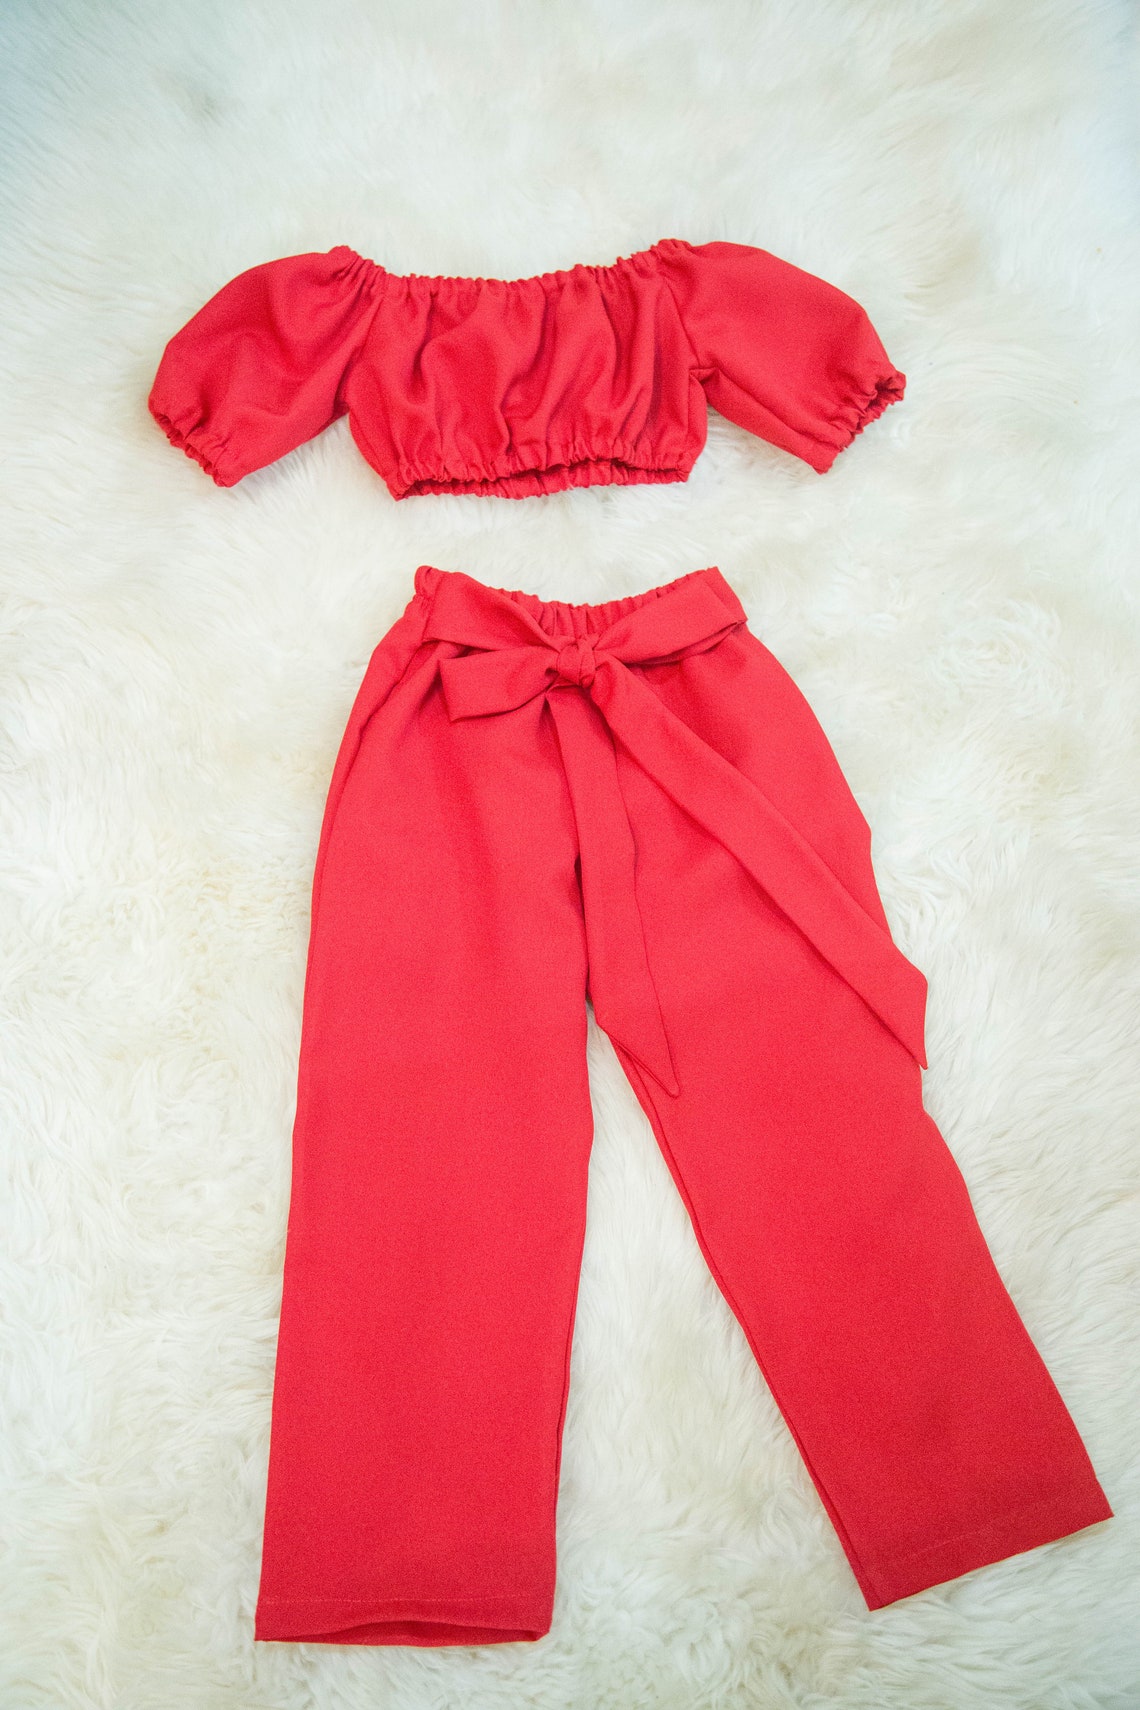 Red Crop Top Pant Sets - Etsy